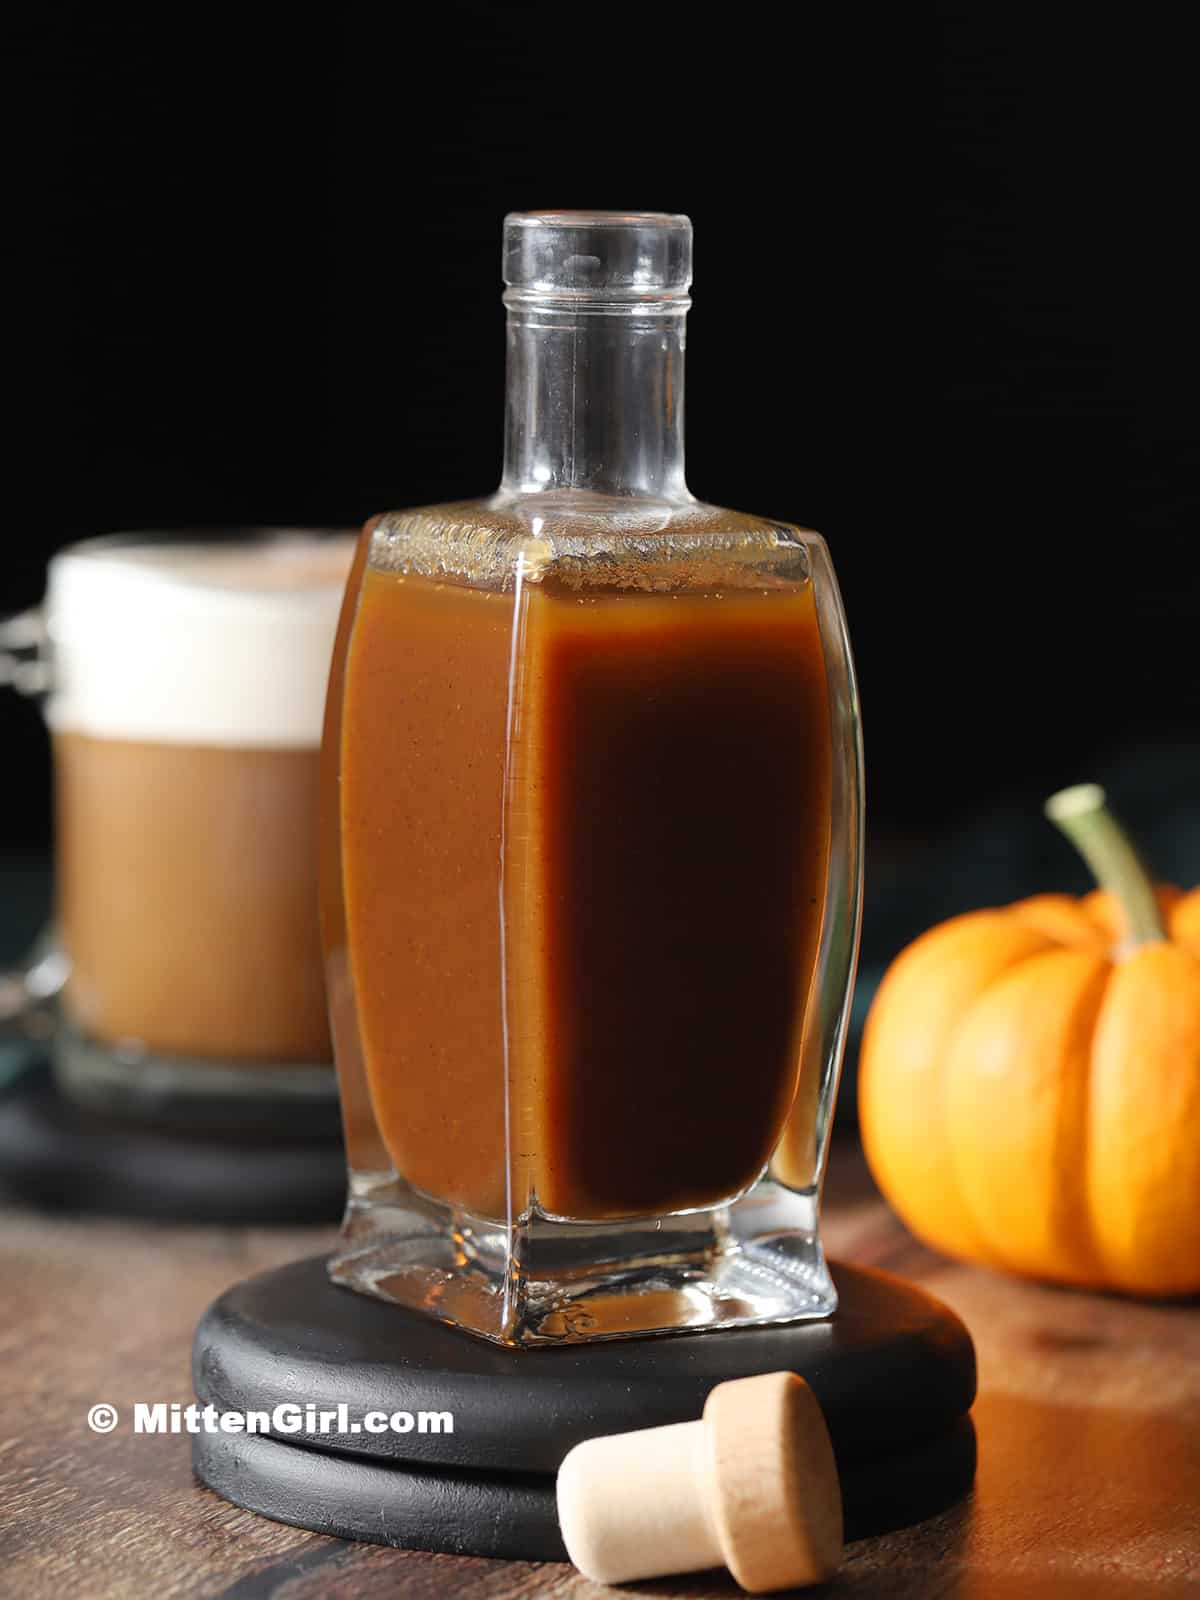 A jar of pumpkin spice syrup.